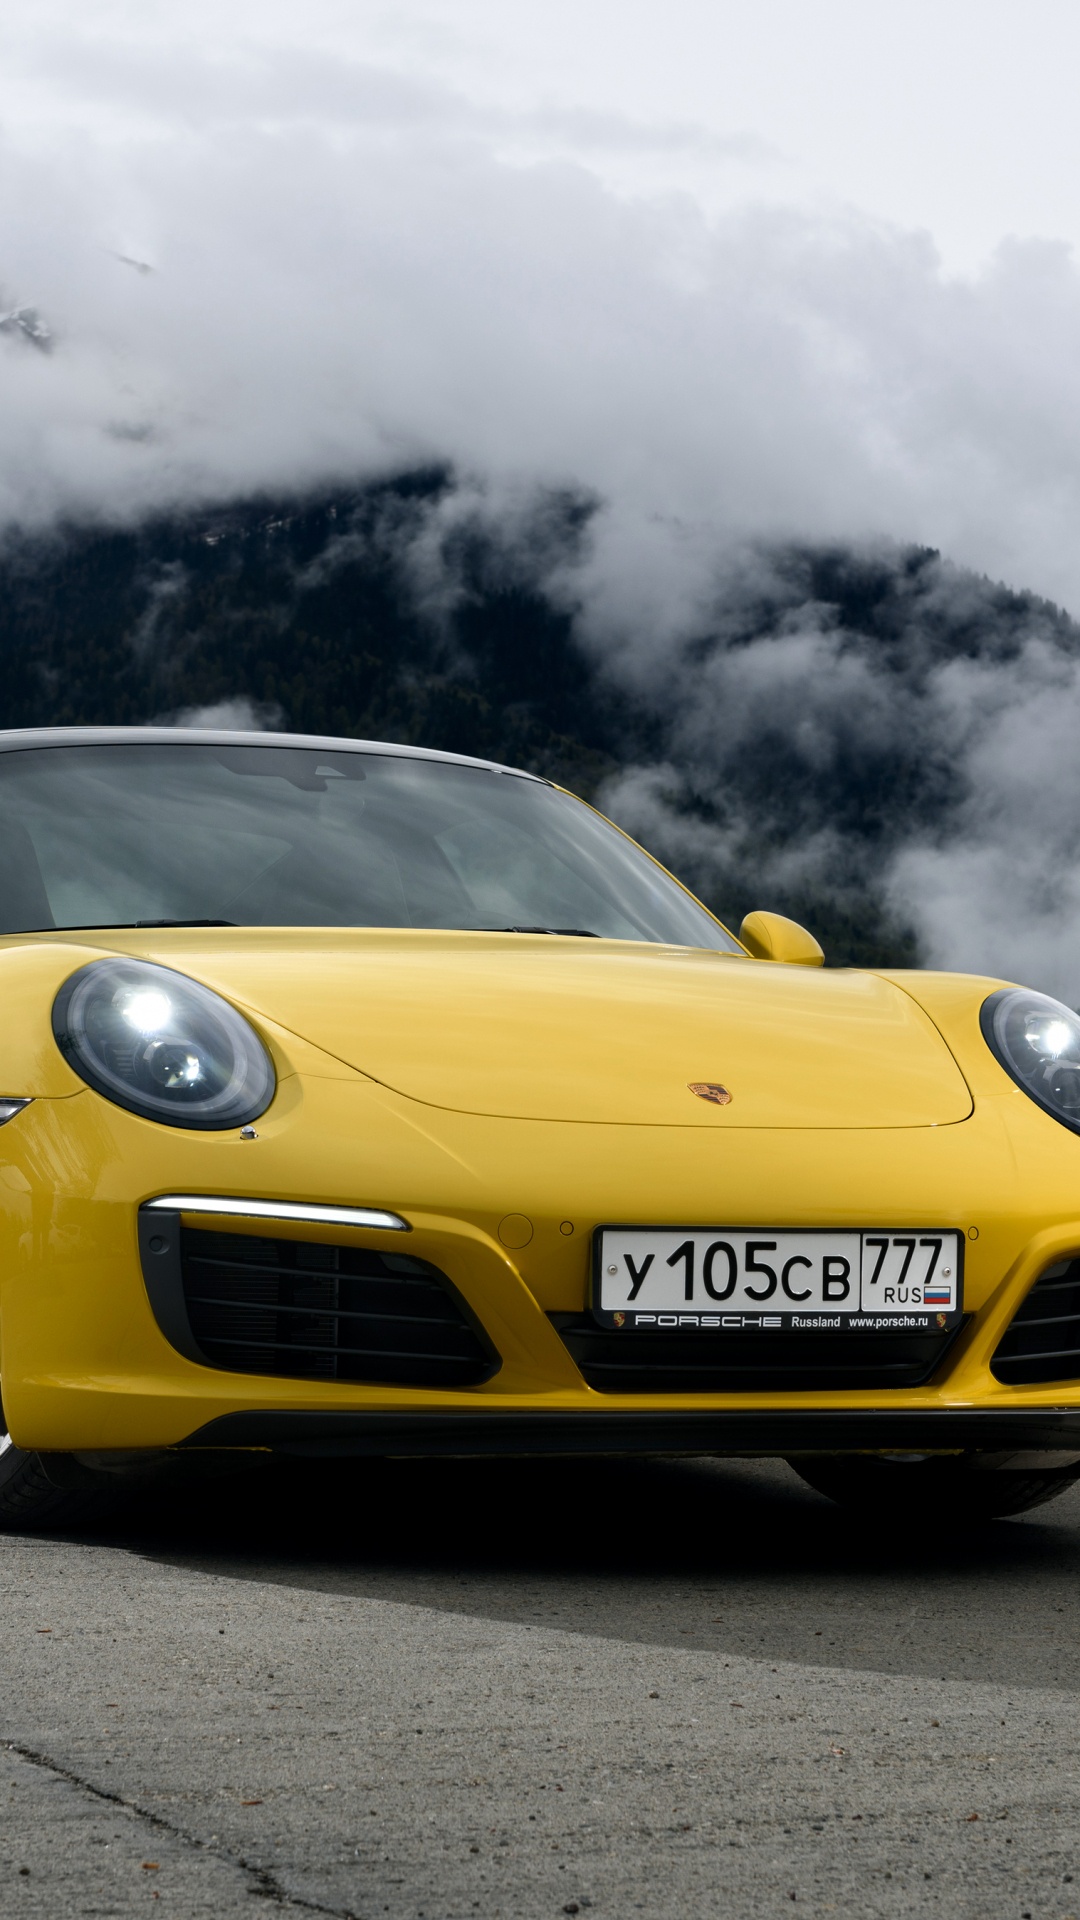 Porsche 911 Amarillo Sobre Carretera de Asfalto Negro Bajo Nubes Grises. Wallpaper in 1080x1920 Resolution